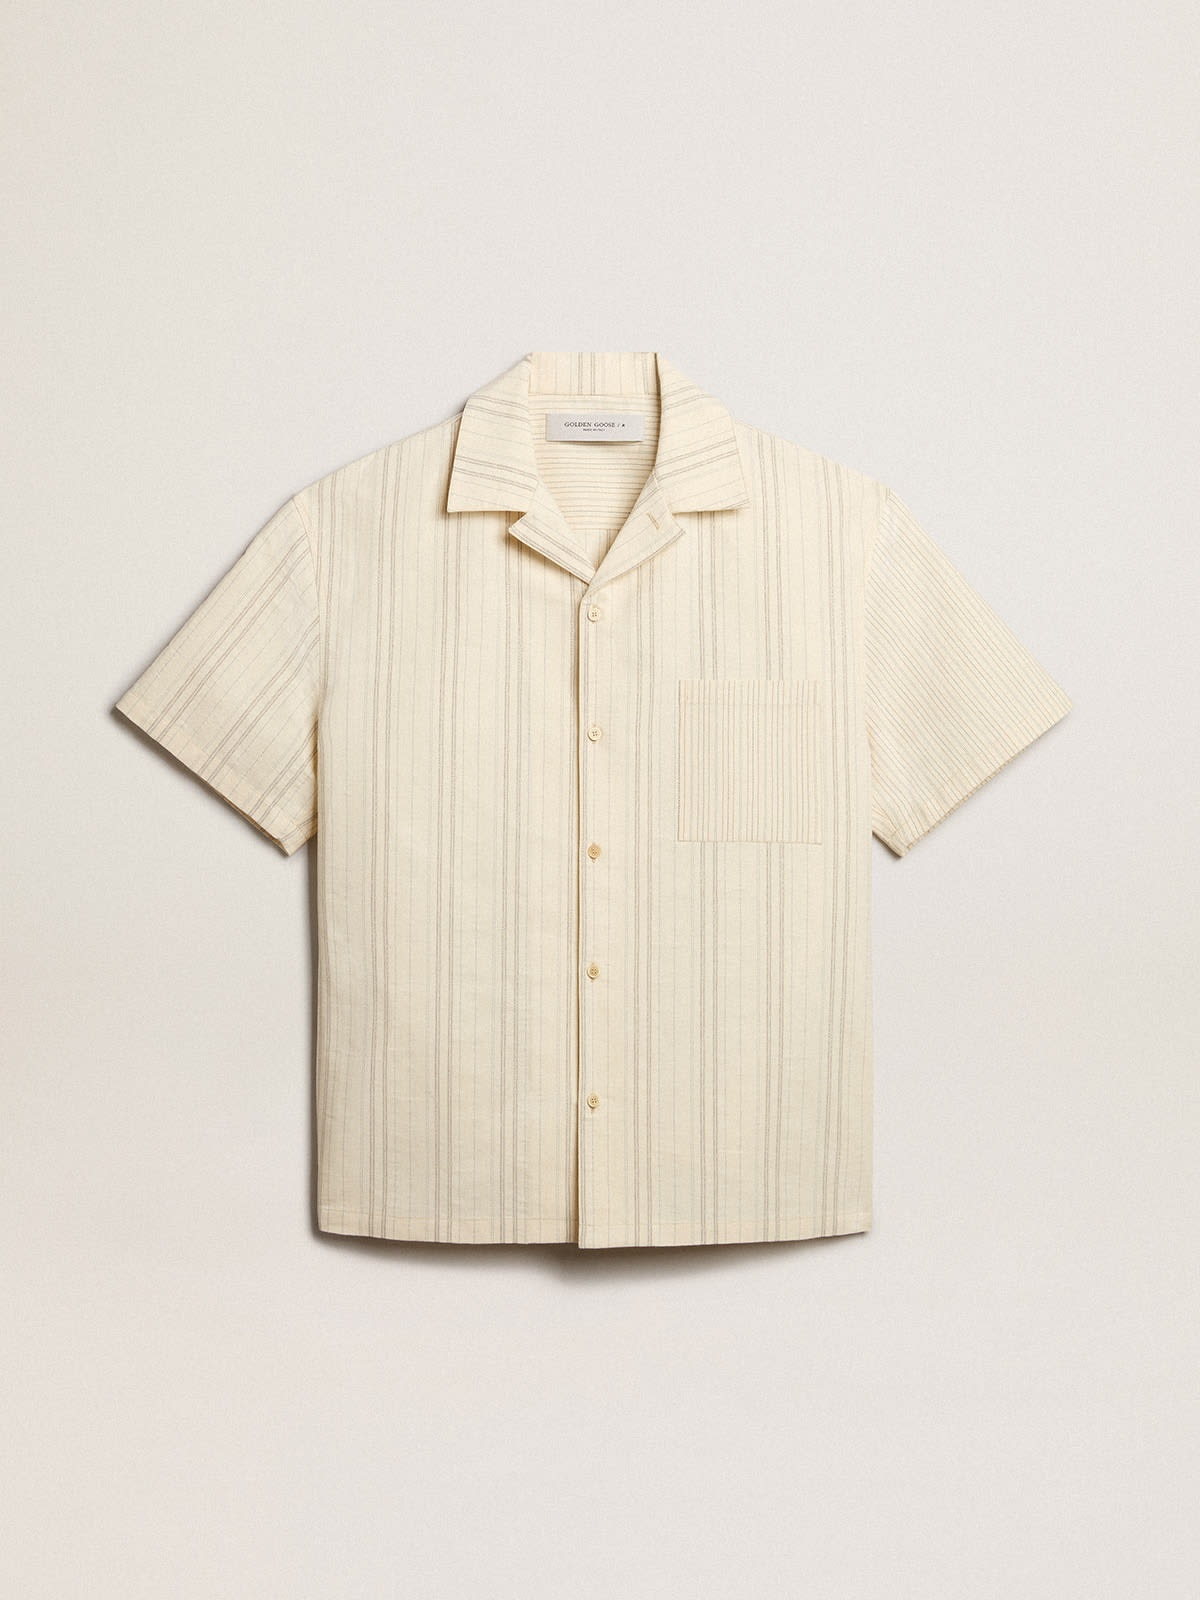 Men's short-sleeved shirt in ecru-colored cotton - 1